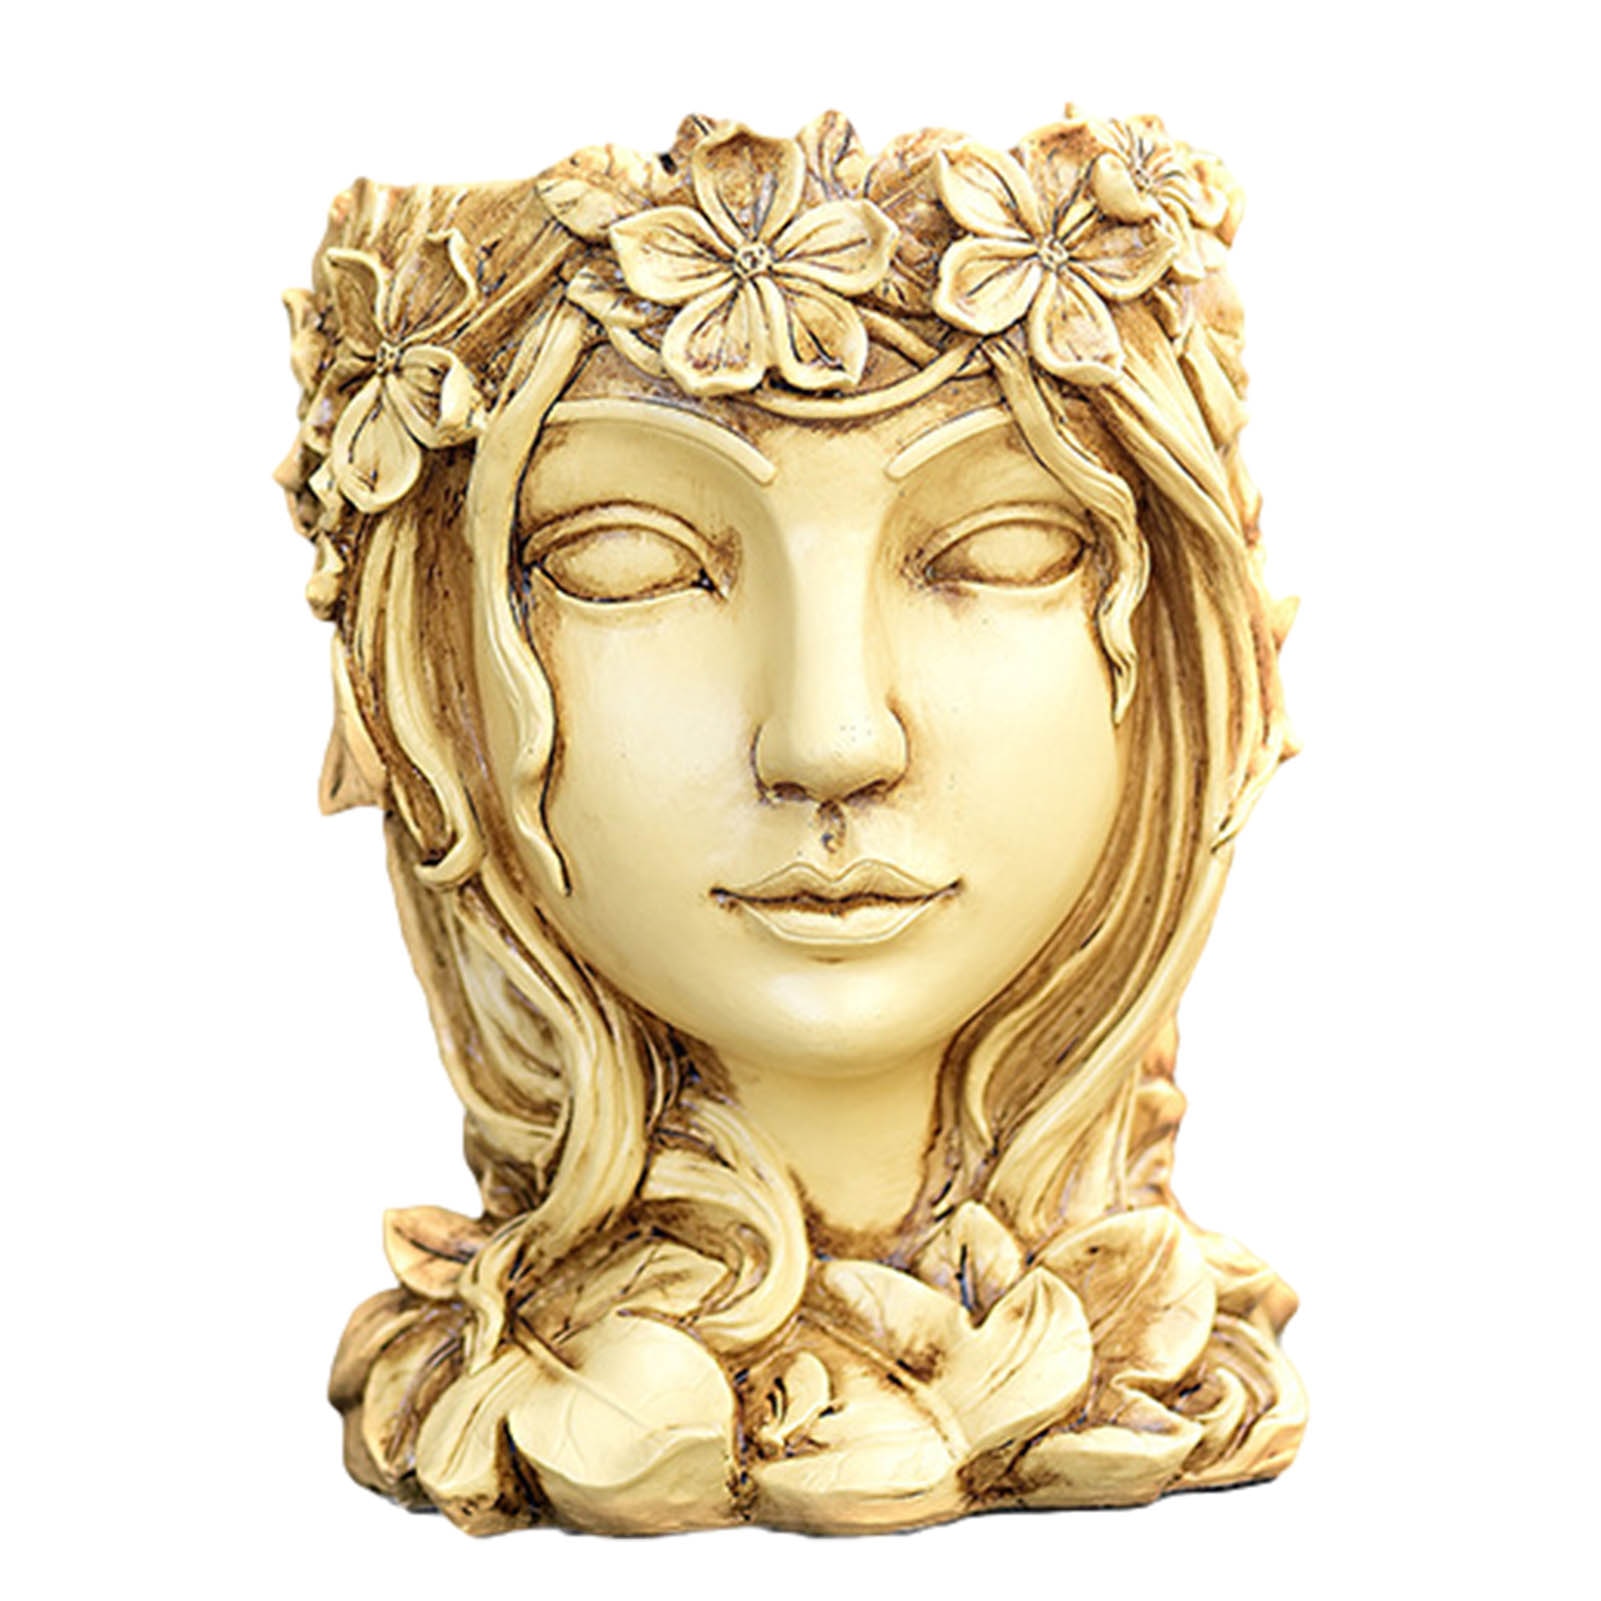 7.9 Inch Goddess Head Planter Statue Resin Flower Pot Succulent Plants Pot Garden Ornament Home Decoration